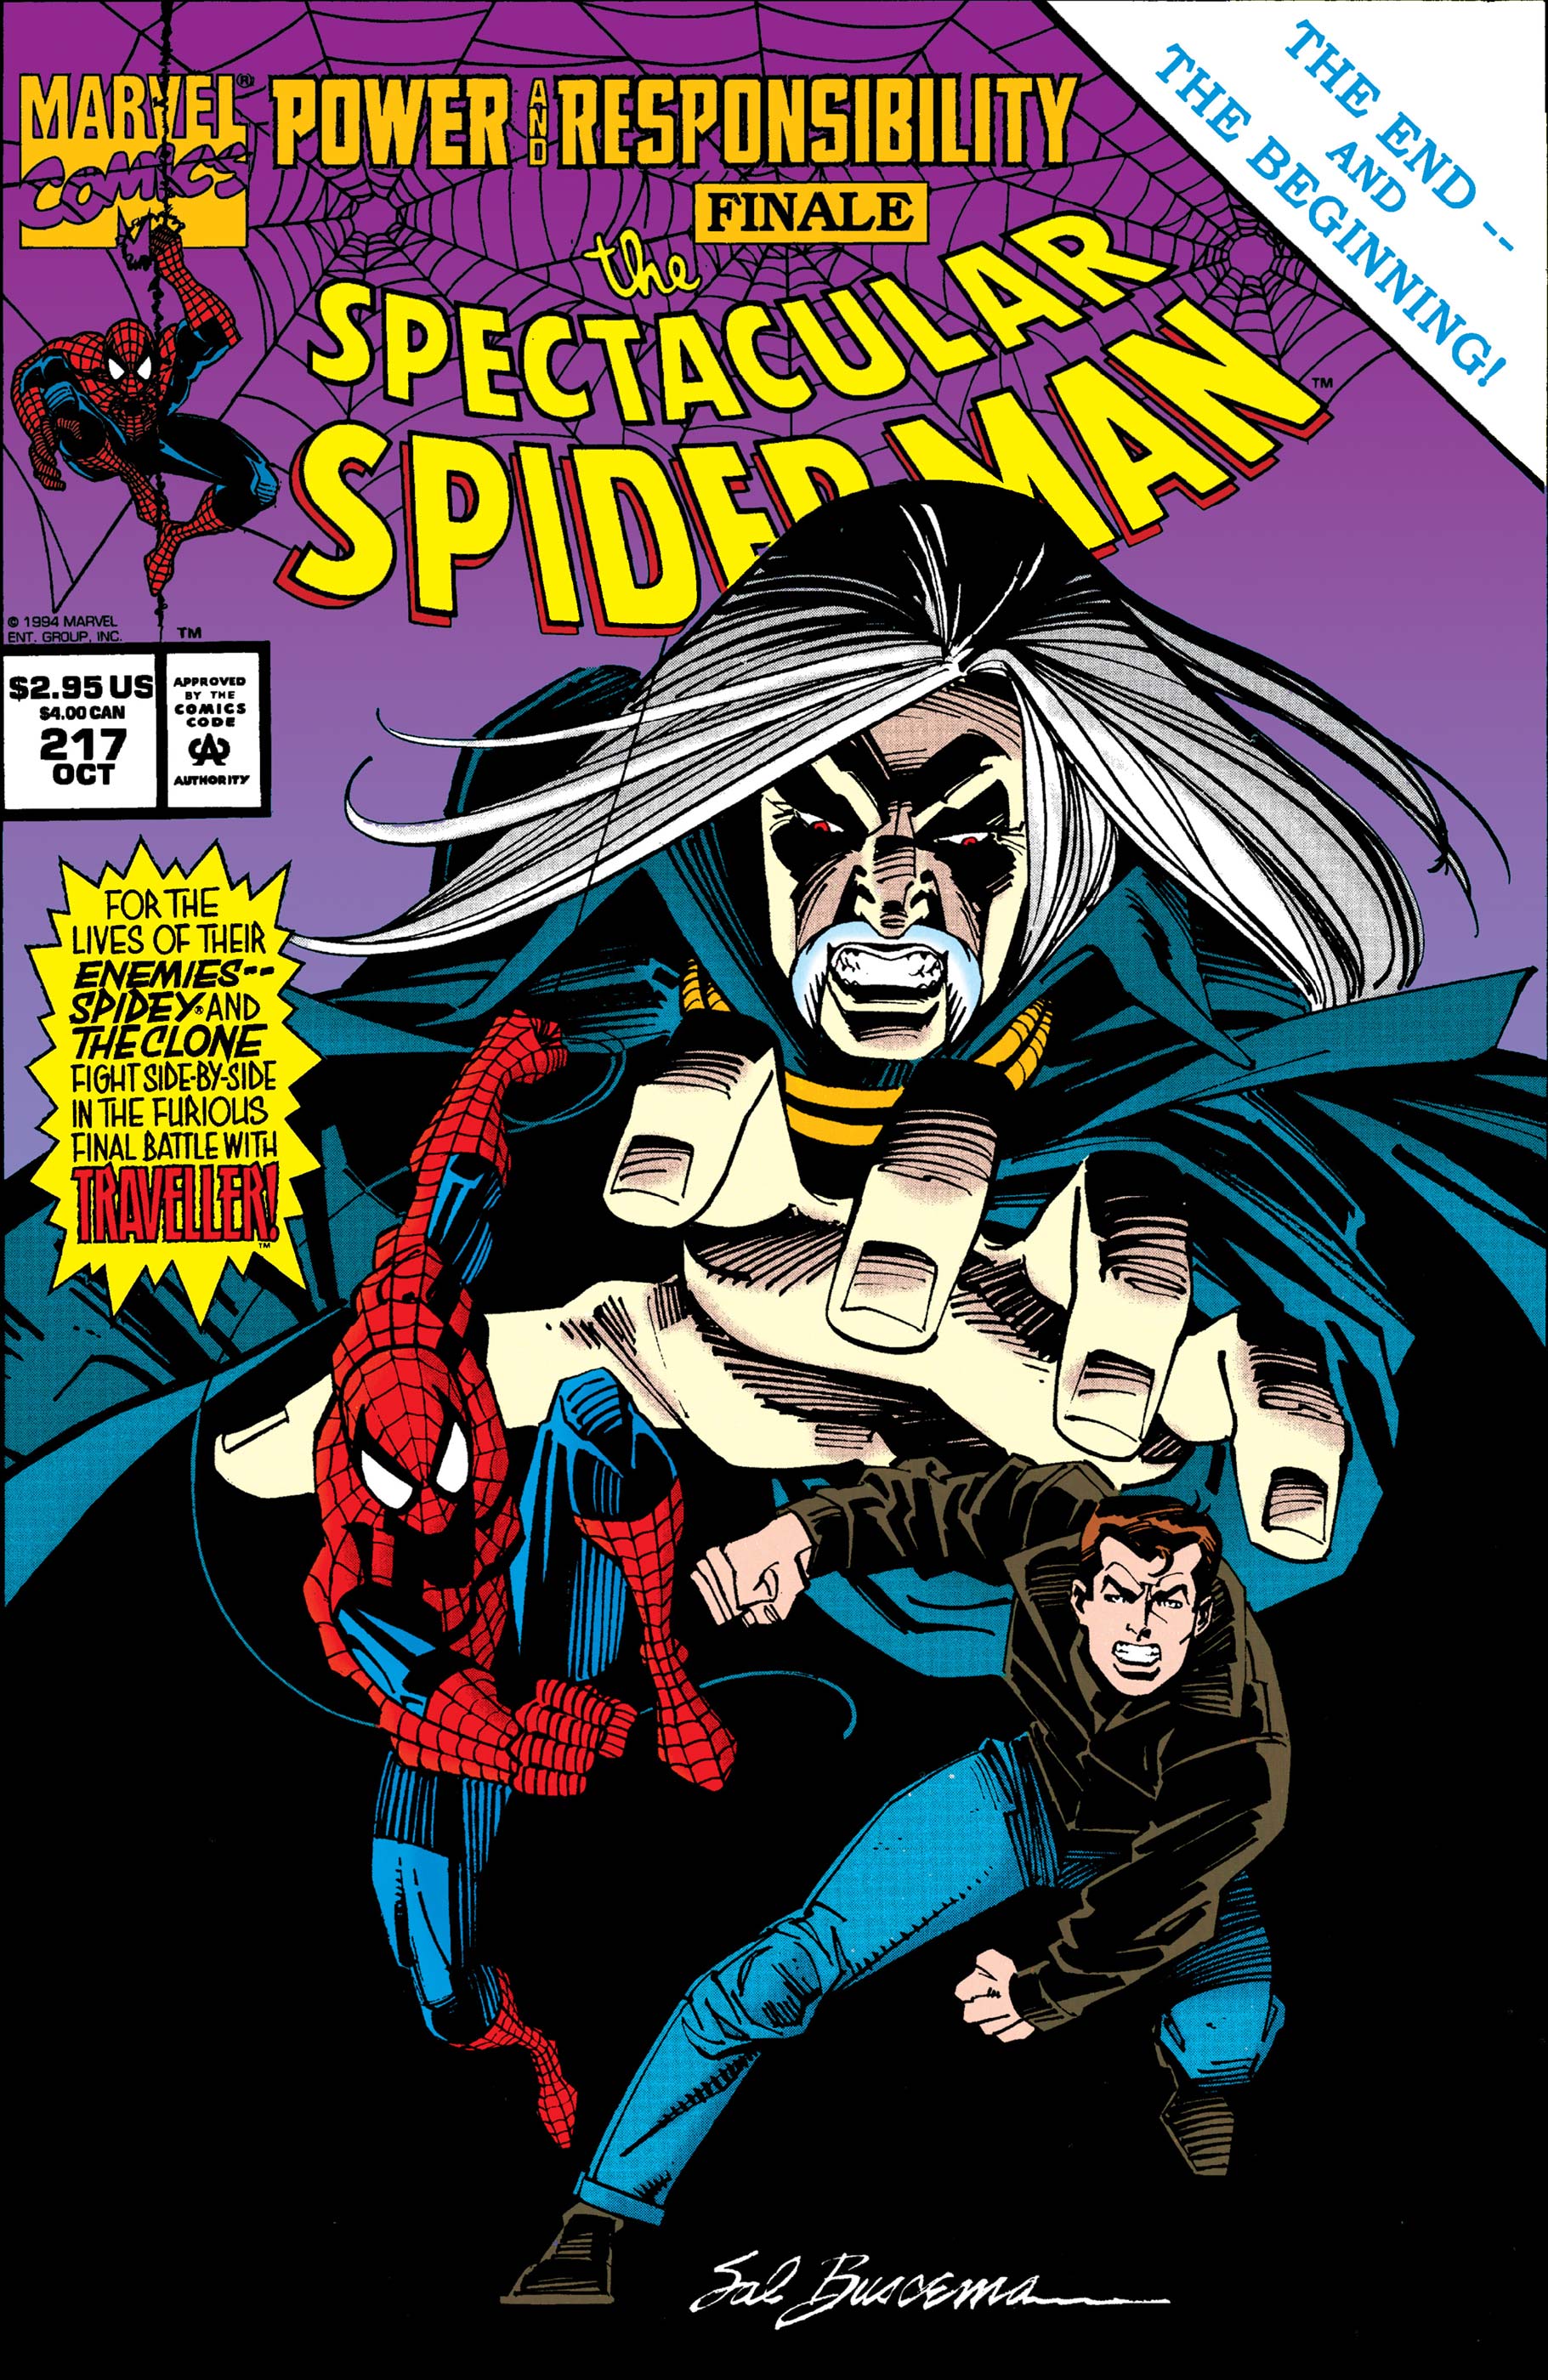 Peter Parker, the Spectacular Spider-Man (1976) #217